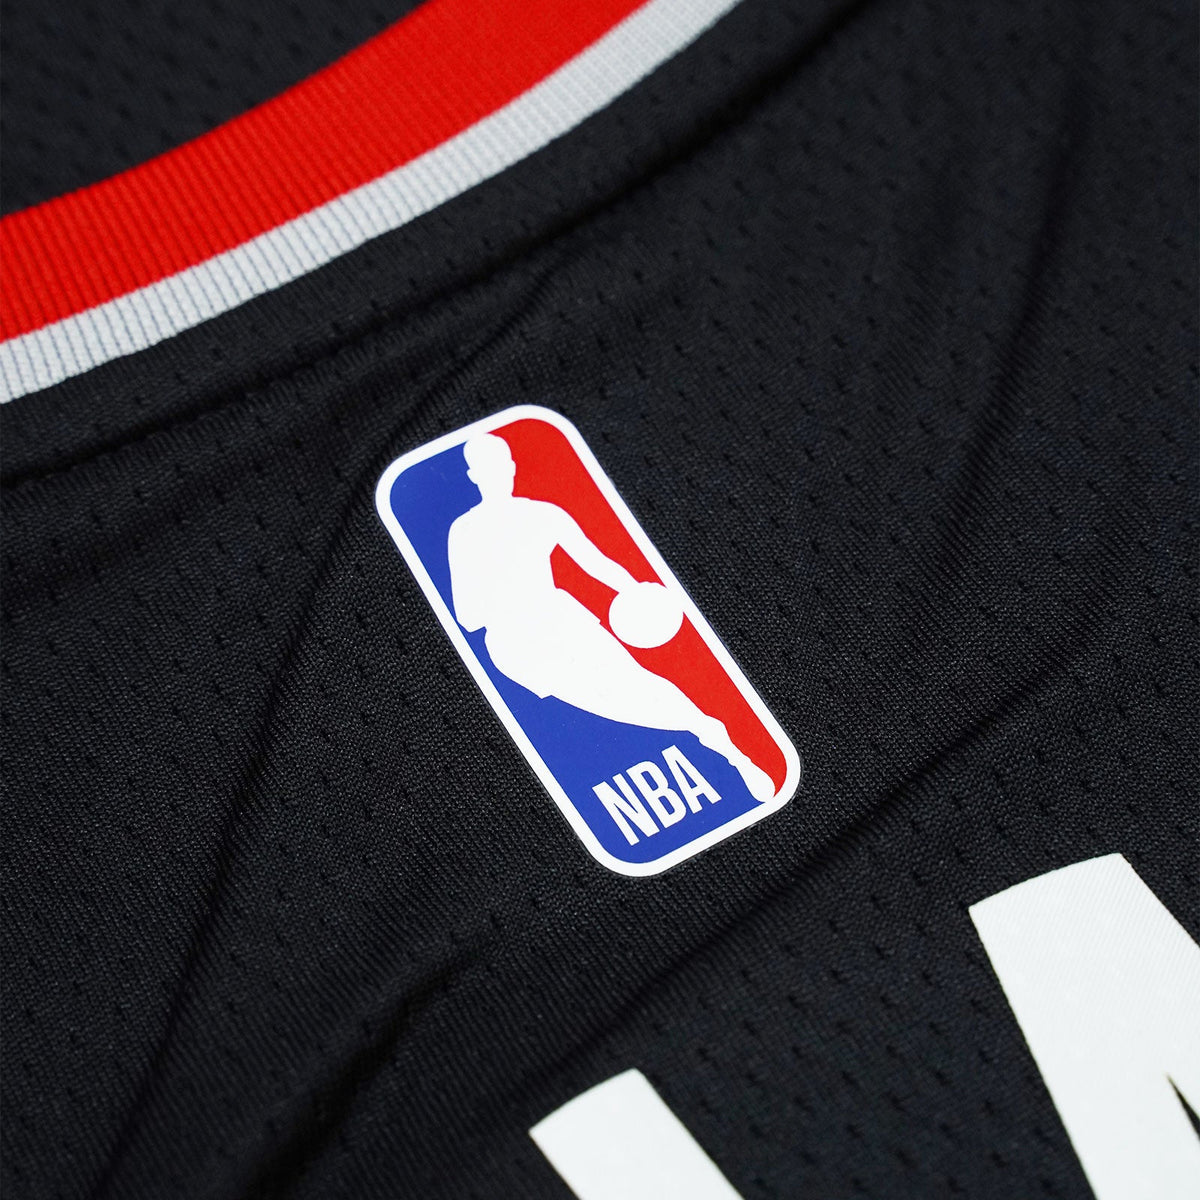 Adidas NBA Swingman Damian Lillard Portland Blazers Jersey Mens Sz Small